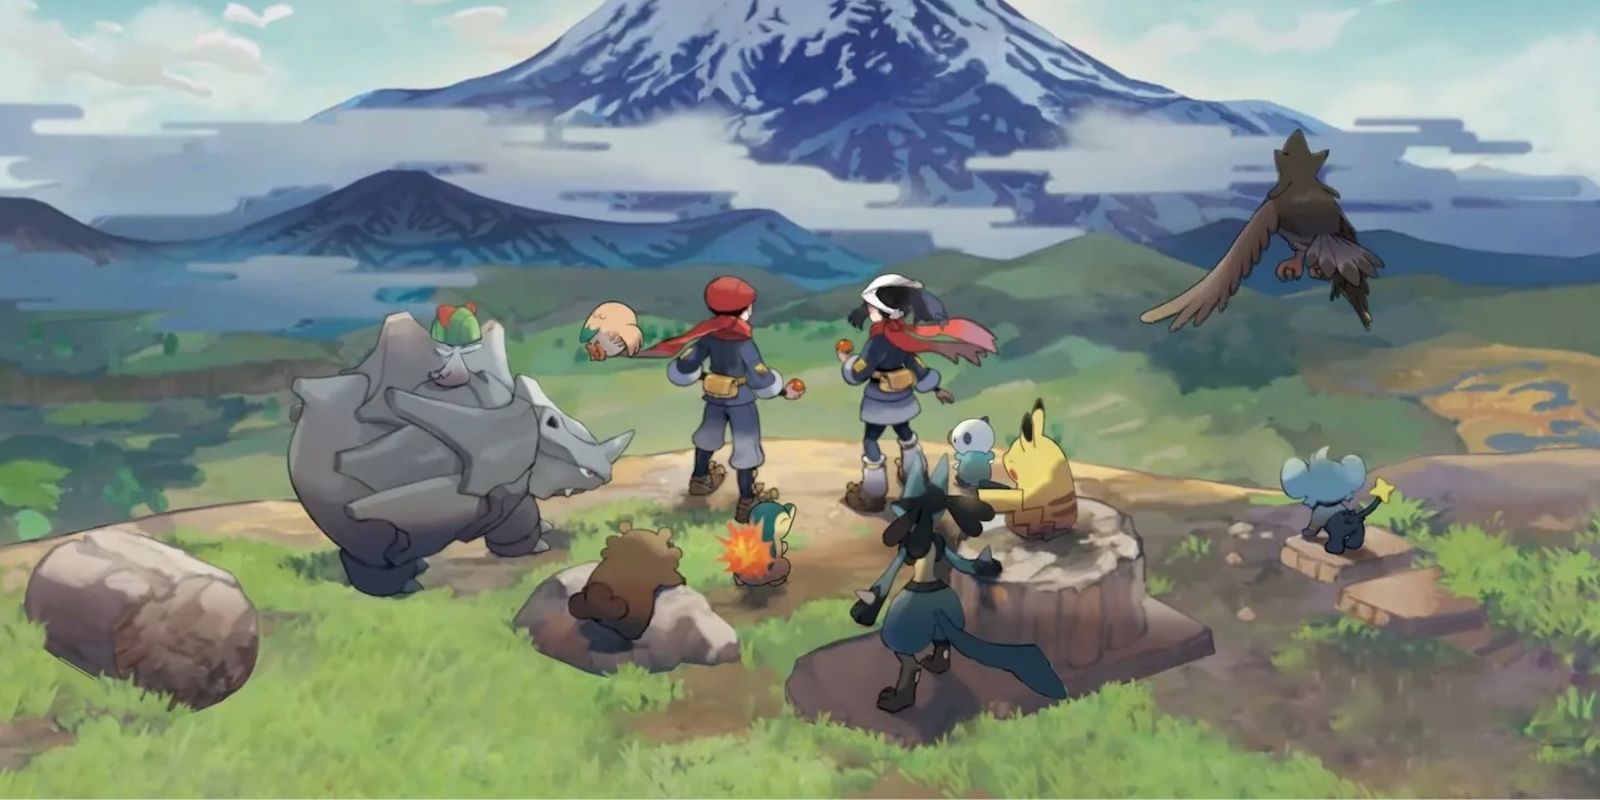 The Entire Pokemon Legends Arceus Pokedex Has Been Leaked – NintendoSoup